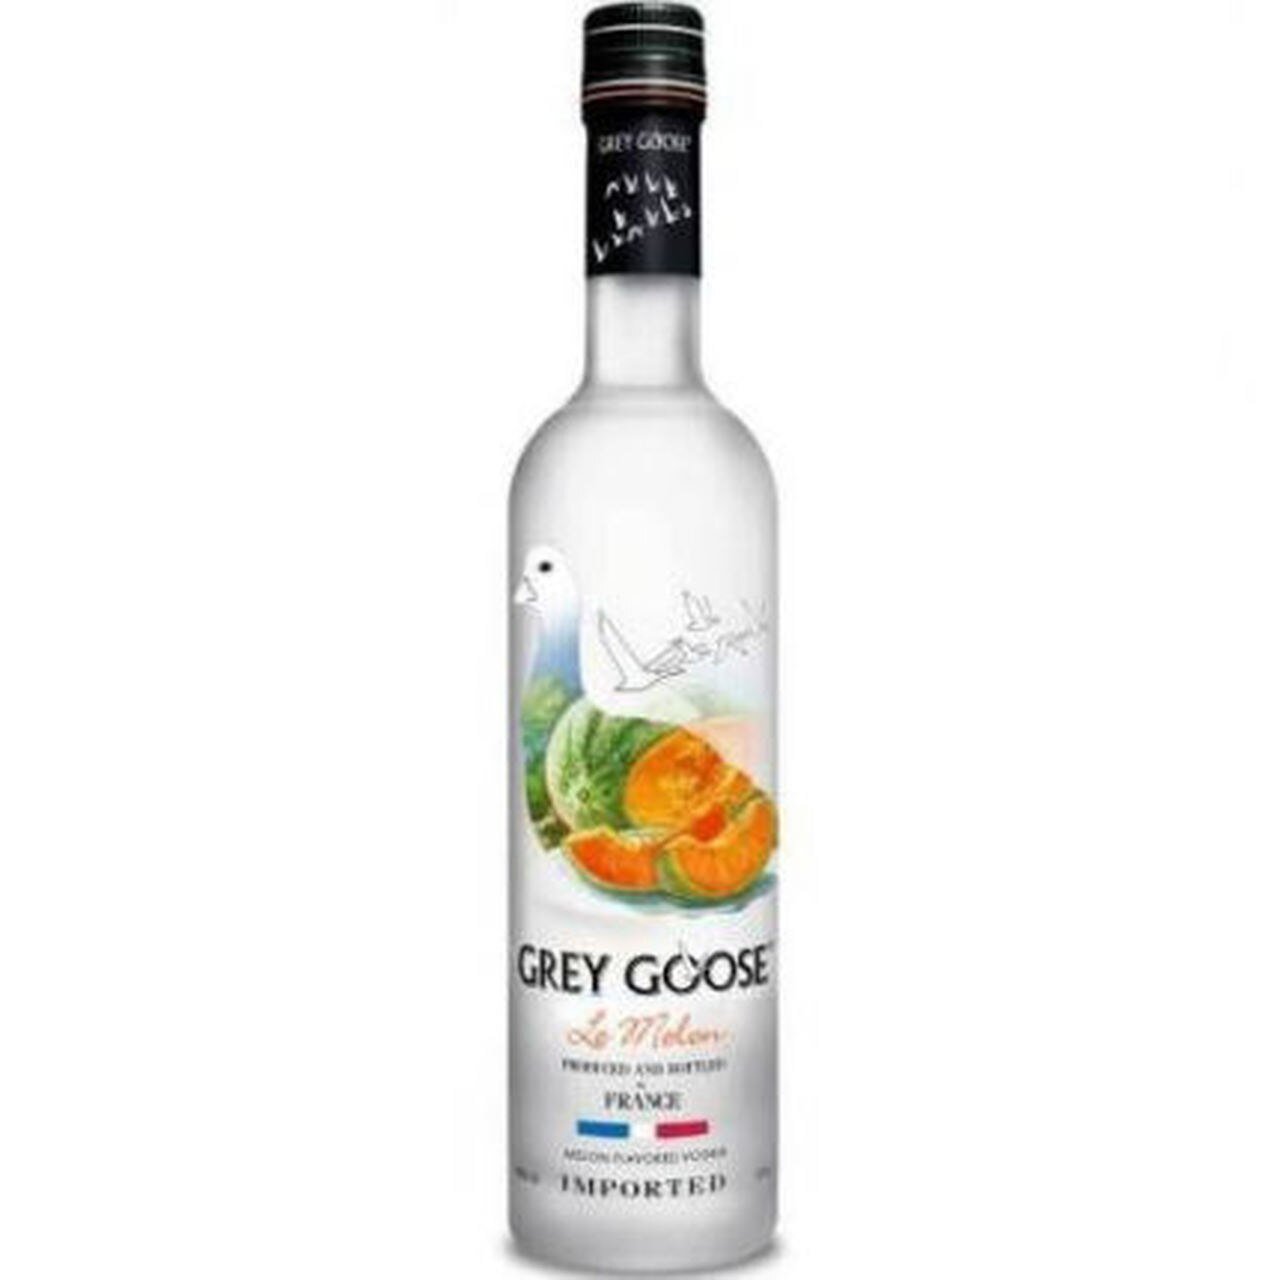 Grey Goose Le Melon French Grain Vodka 750ml